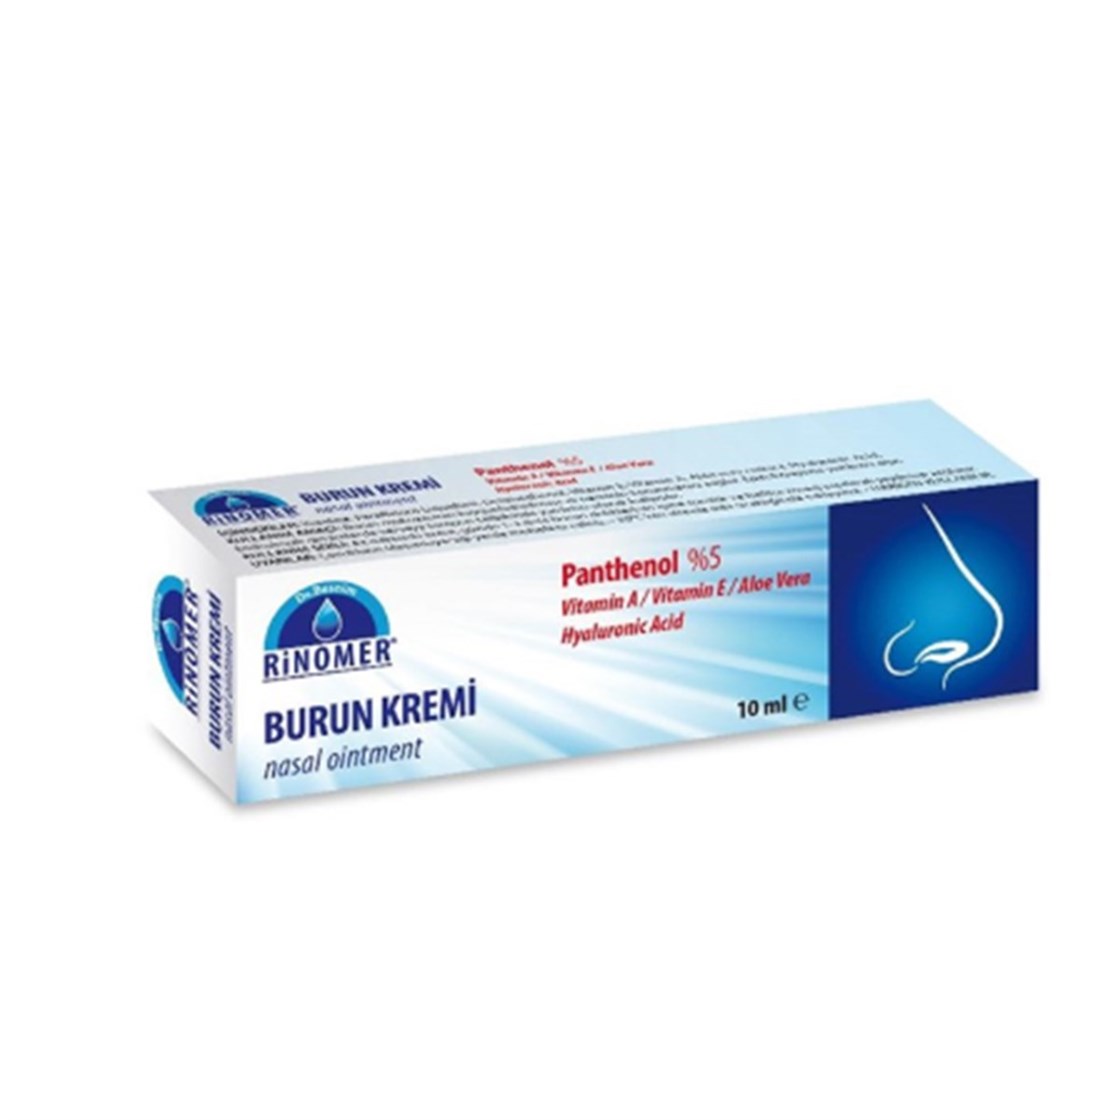 Rinomer Burun Kremi 10 ml | Dermoailem